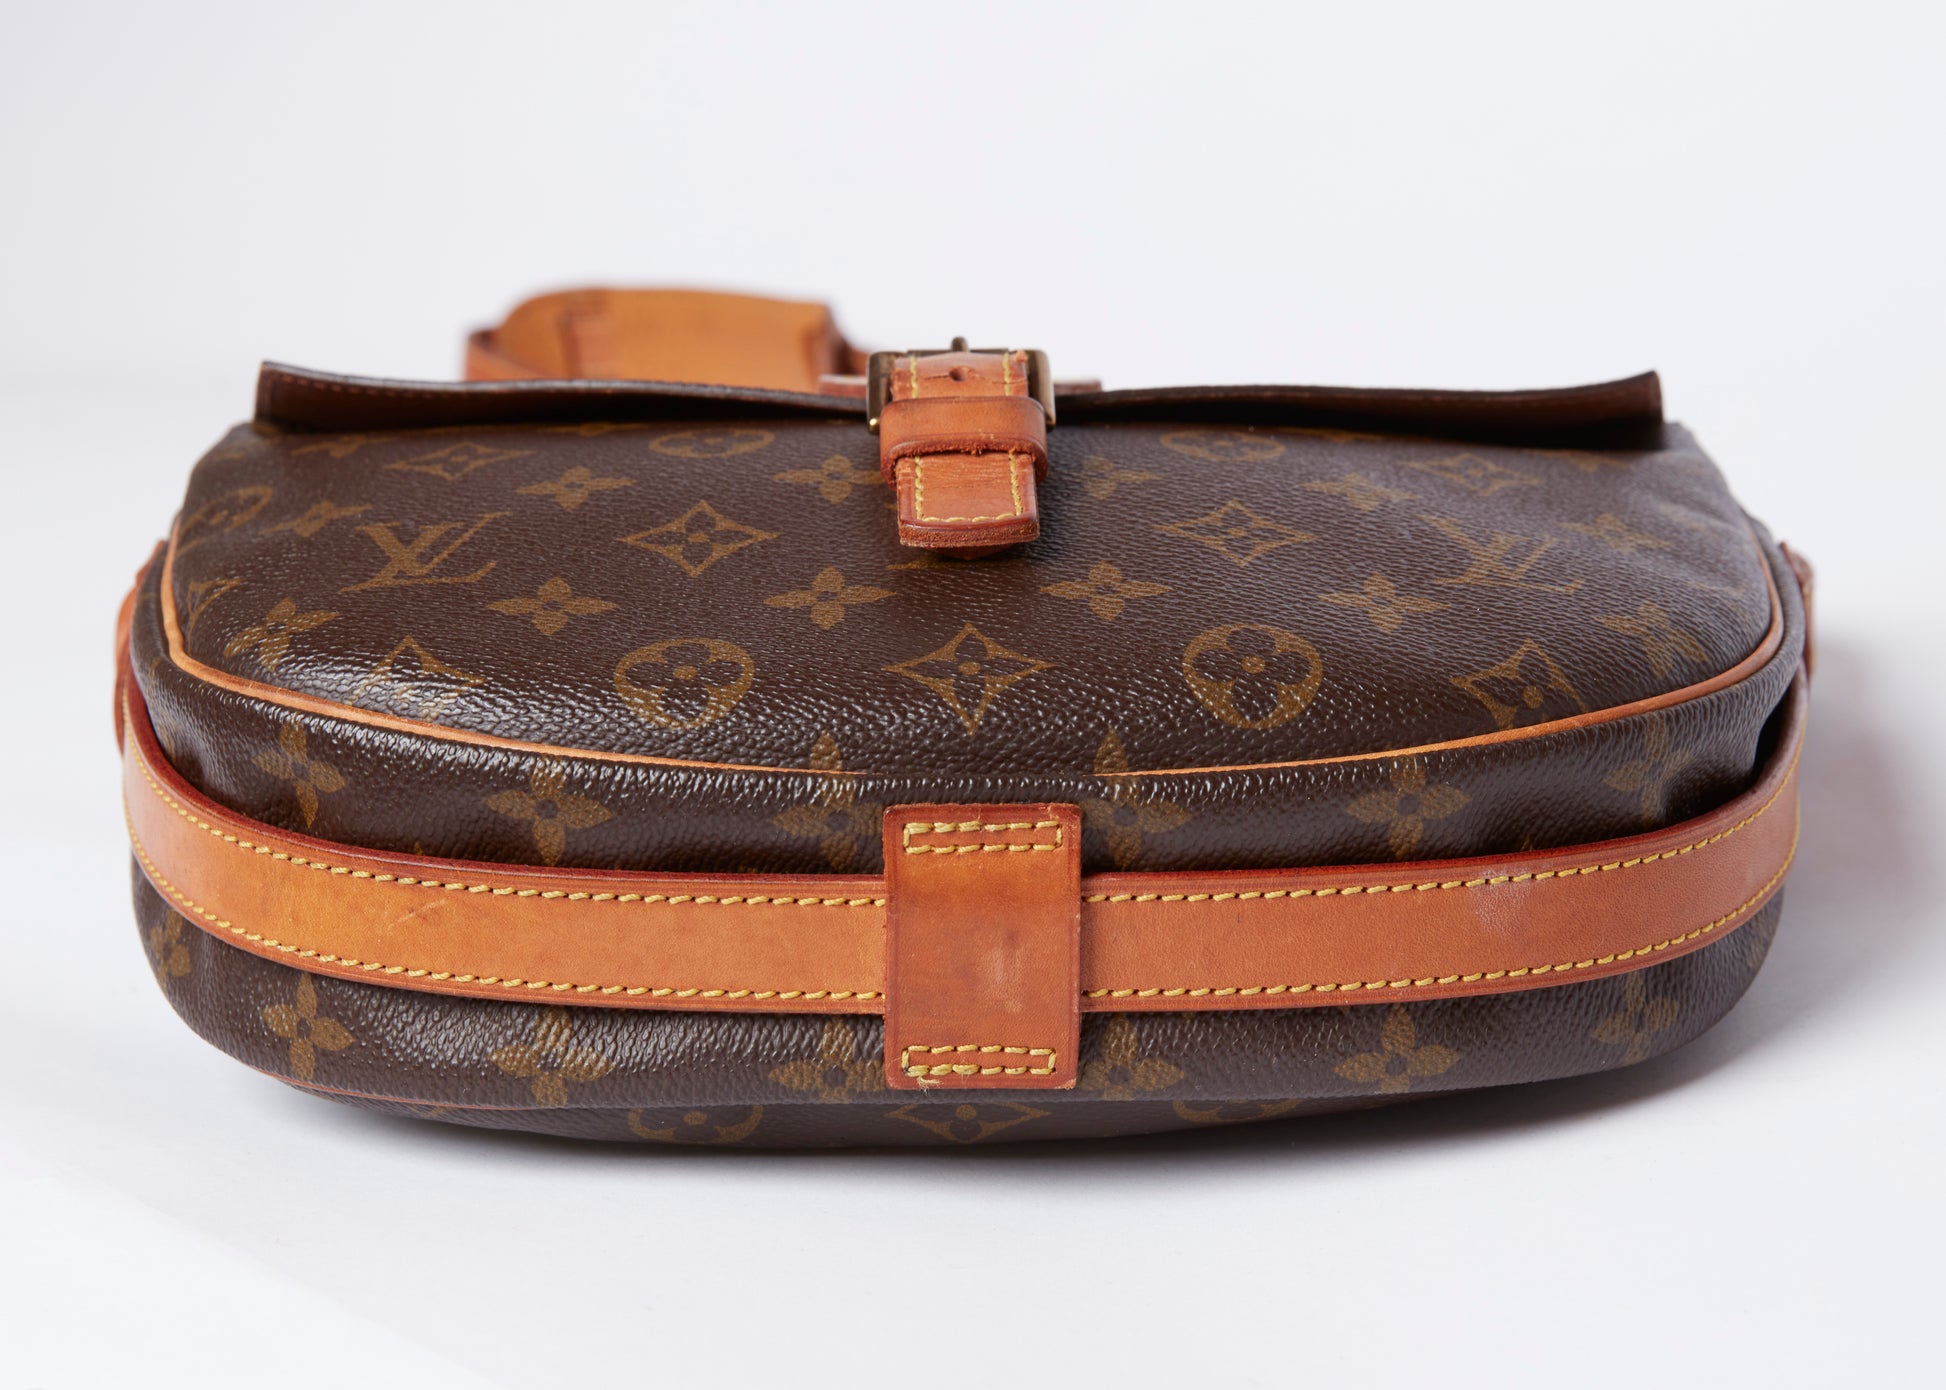 Louis Vuitton saddle bag